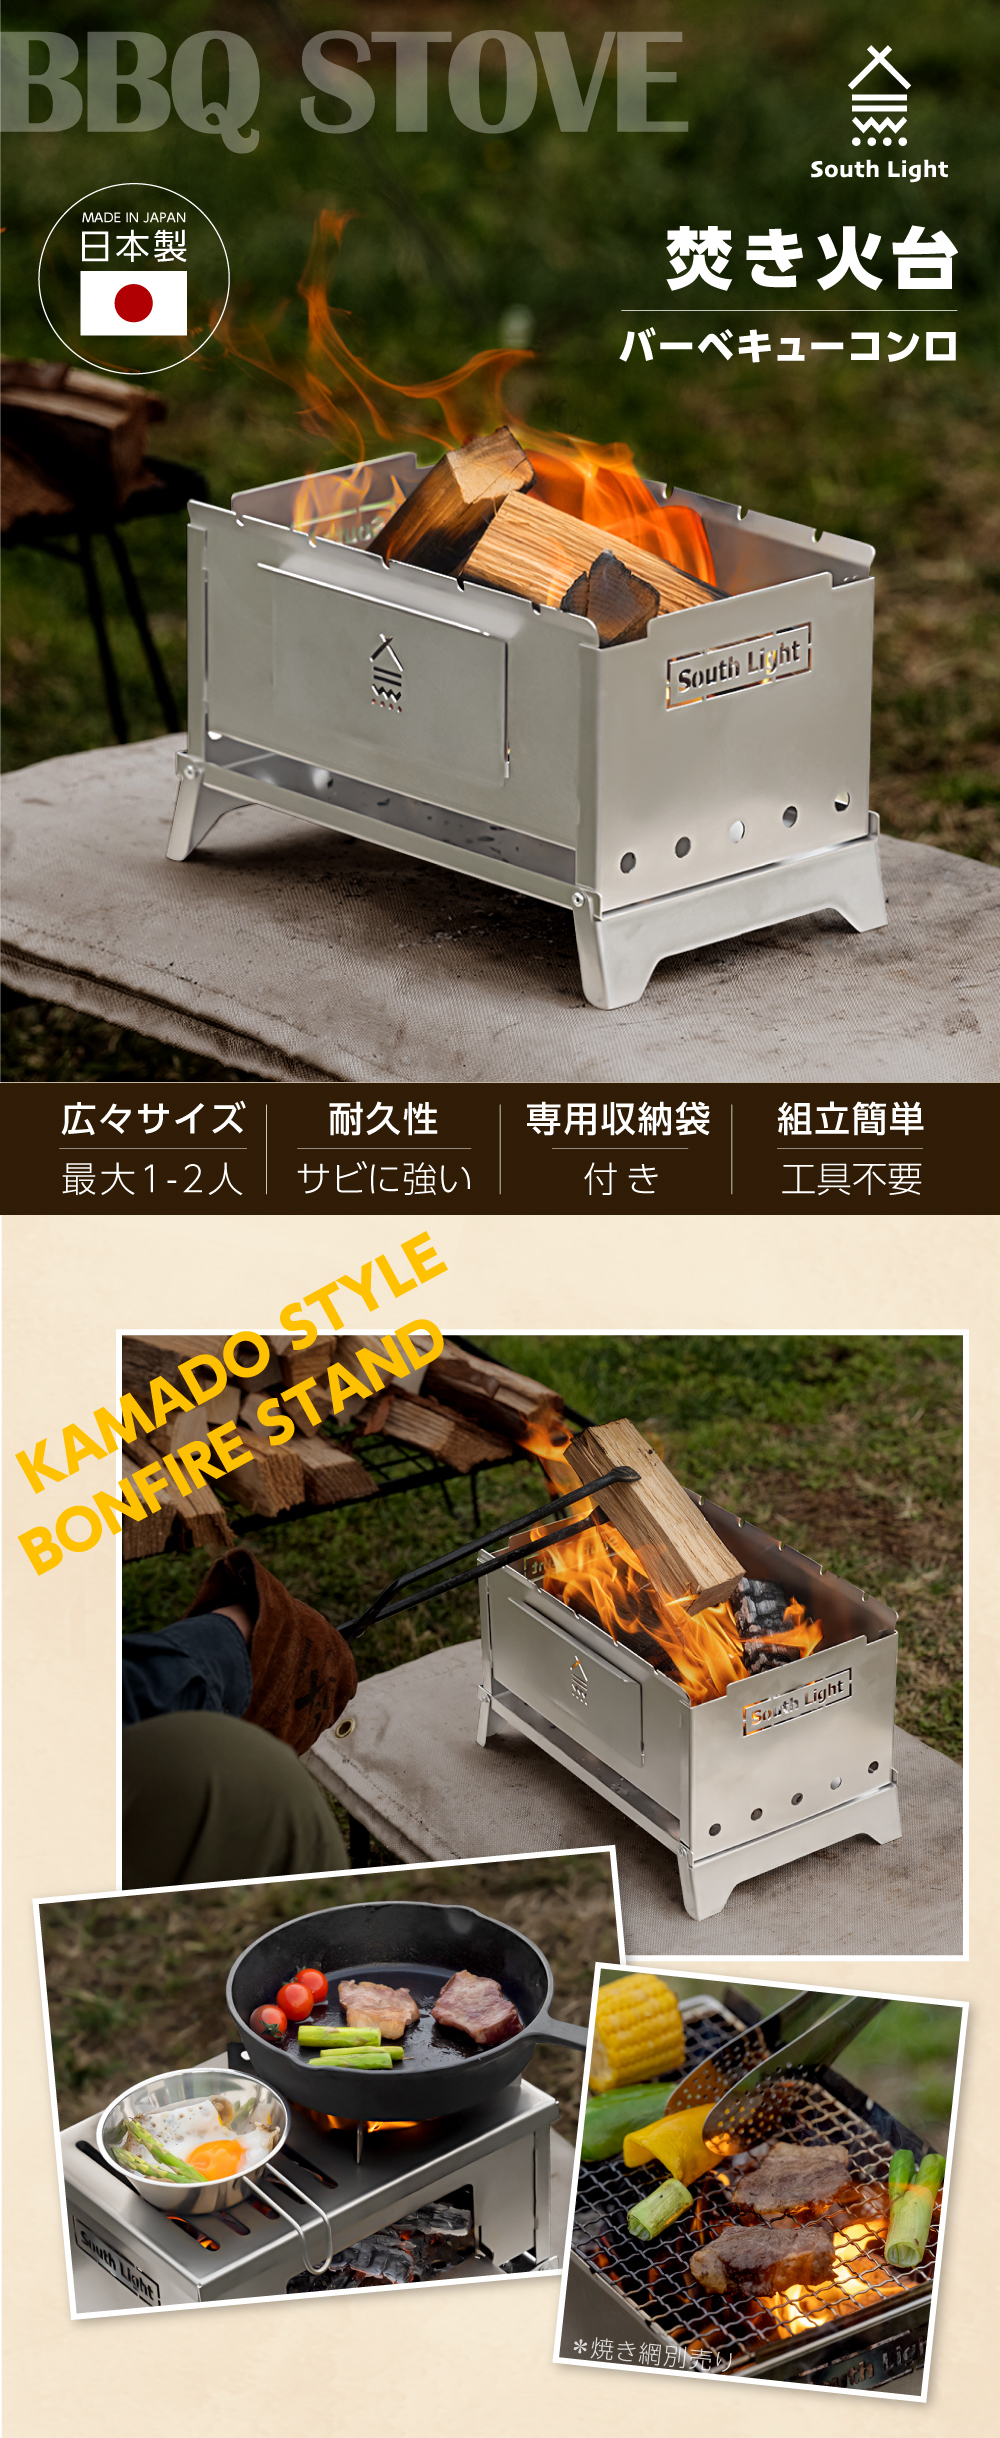 South Light 焚き火台 日本製 焚火台 バーベキューコンロ BBQ キャンプ